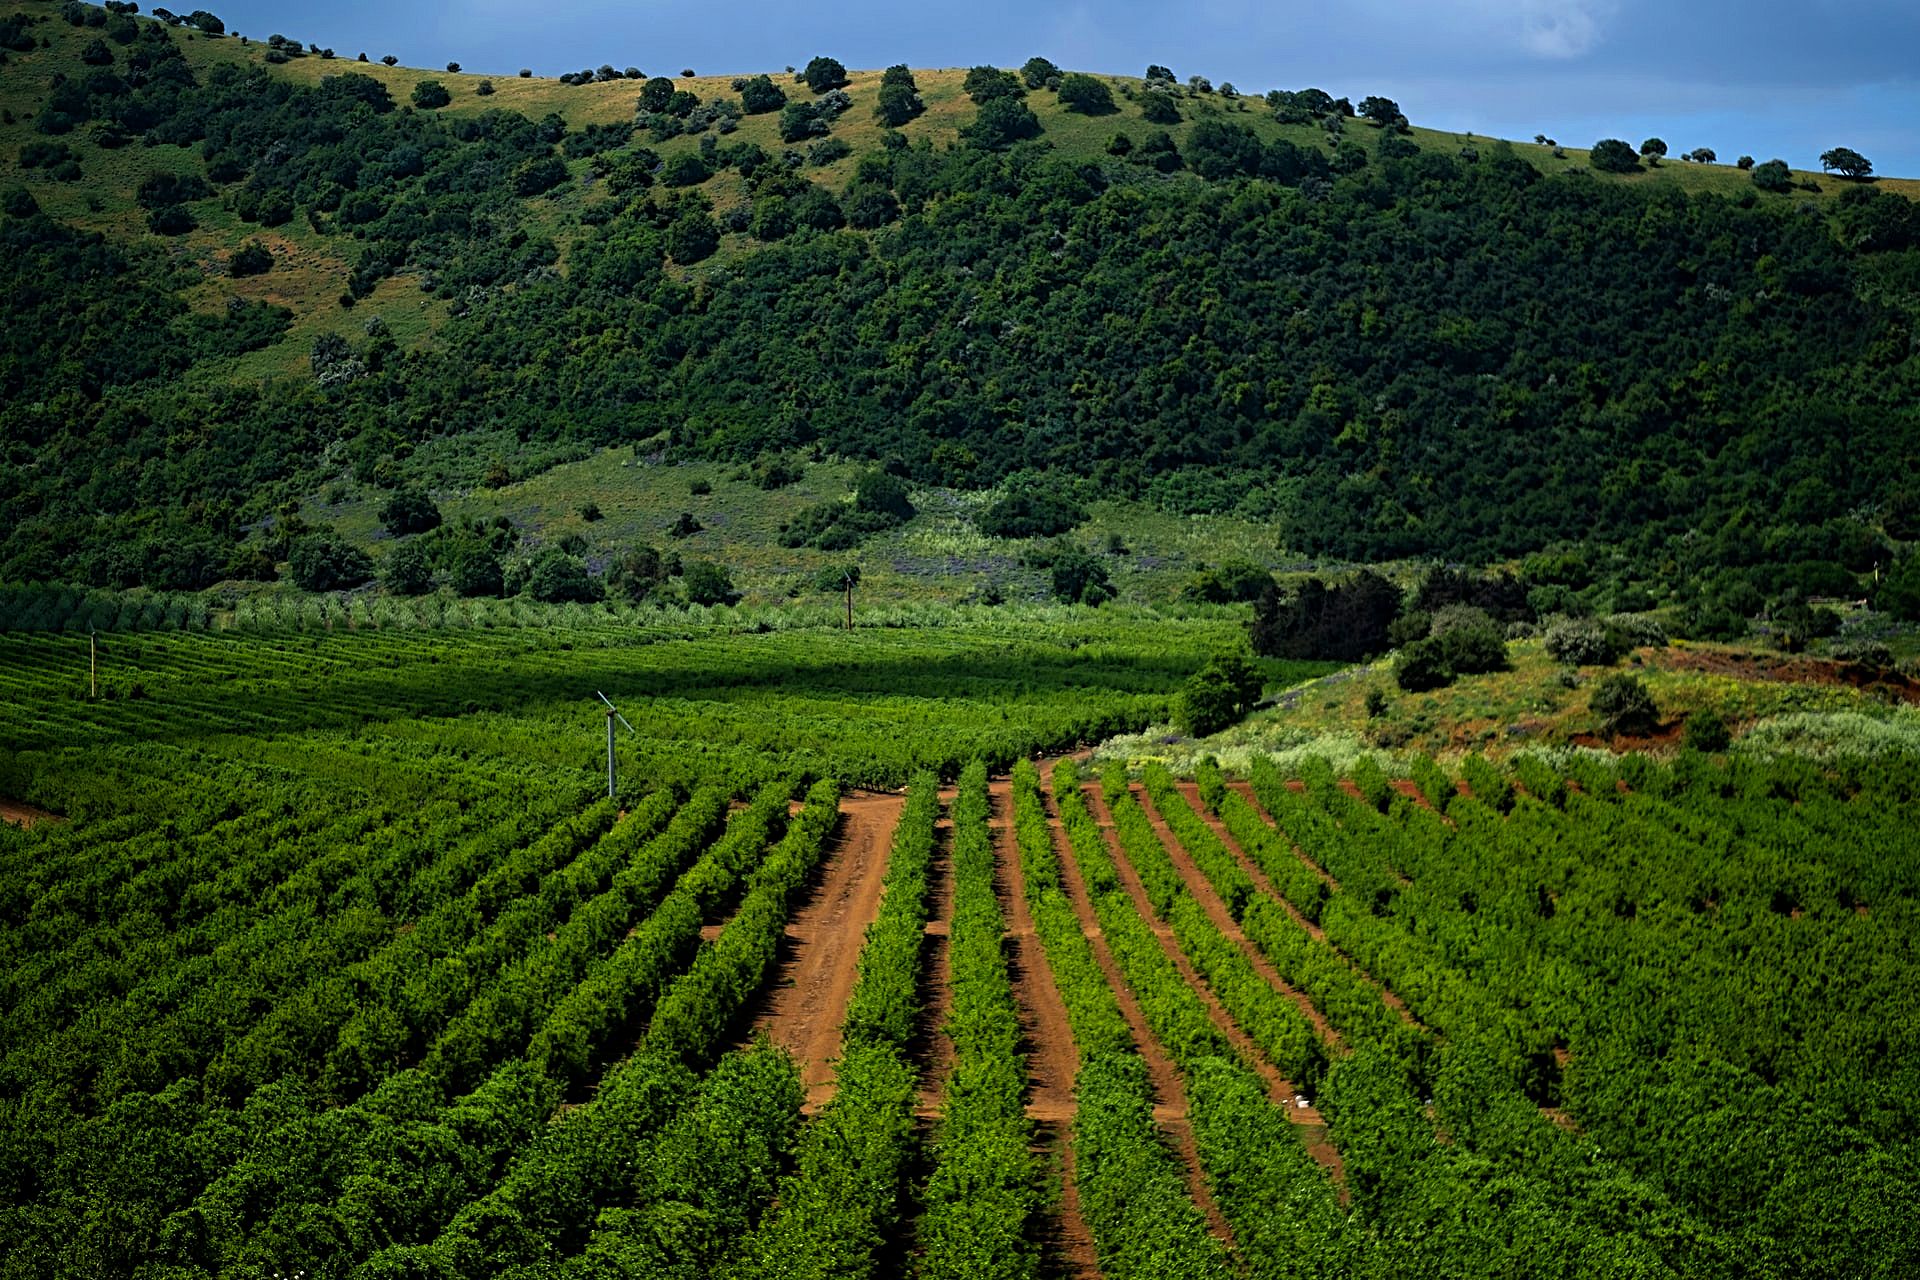 Vineyards in the Golan